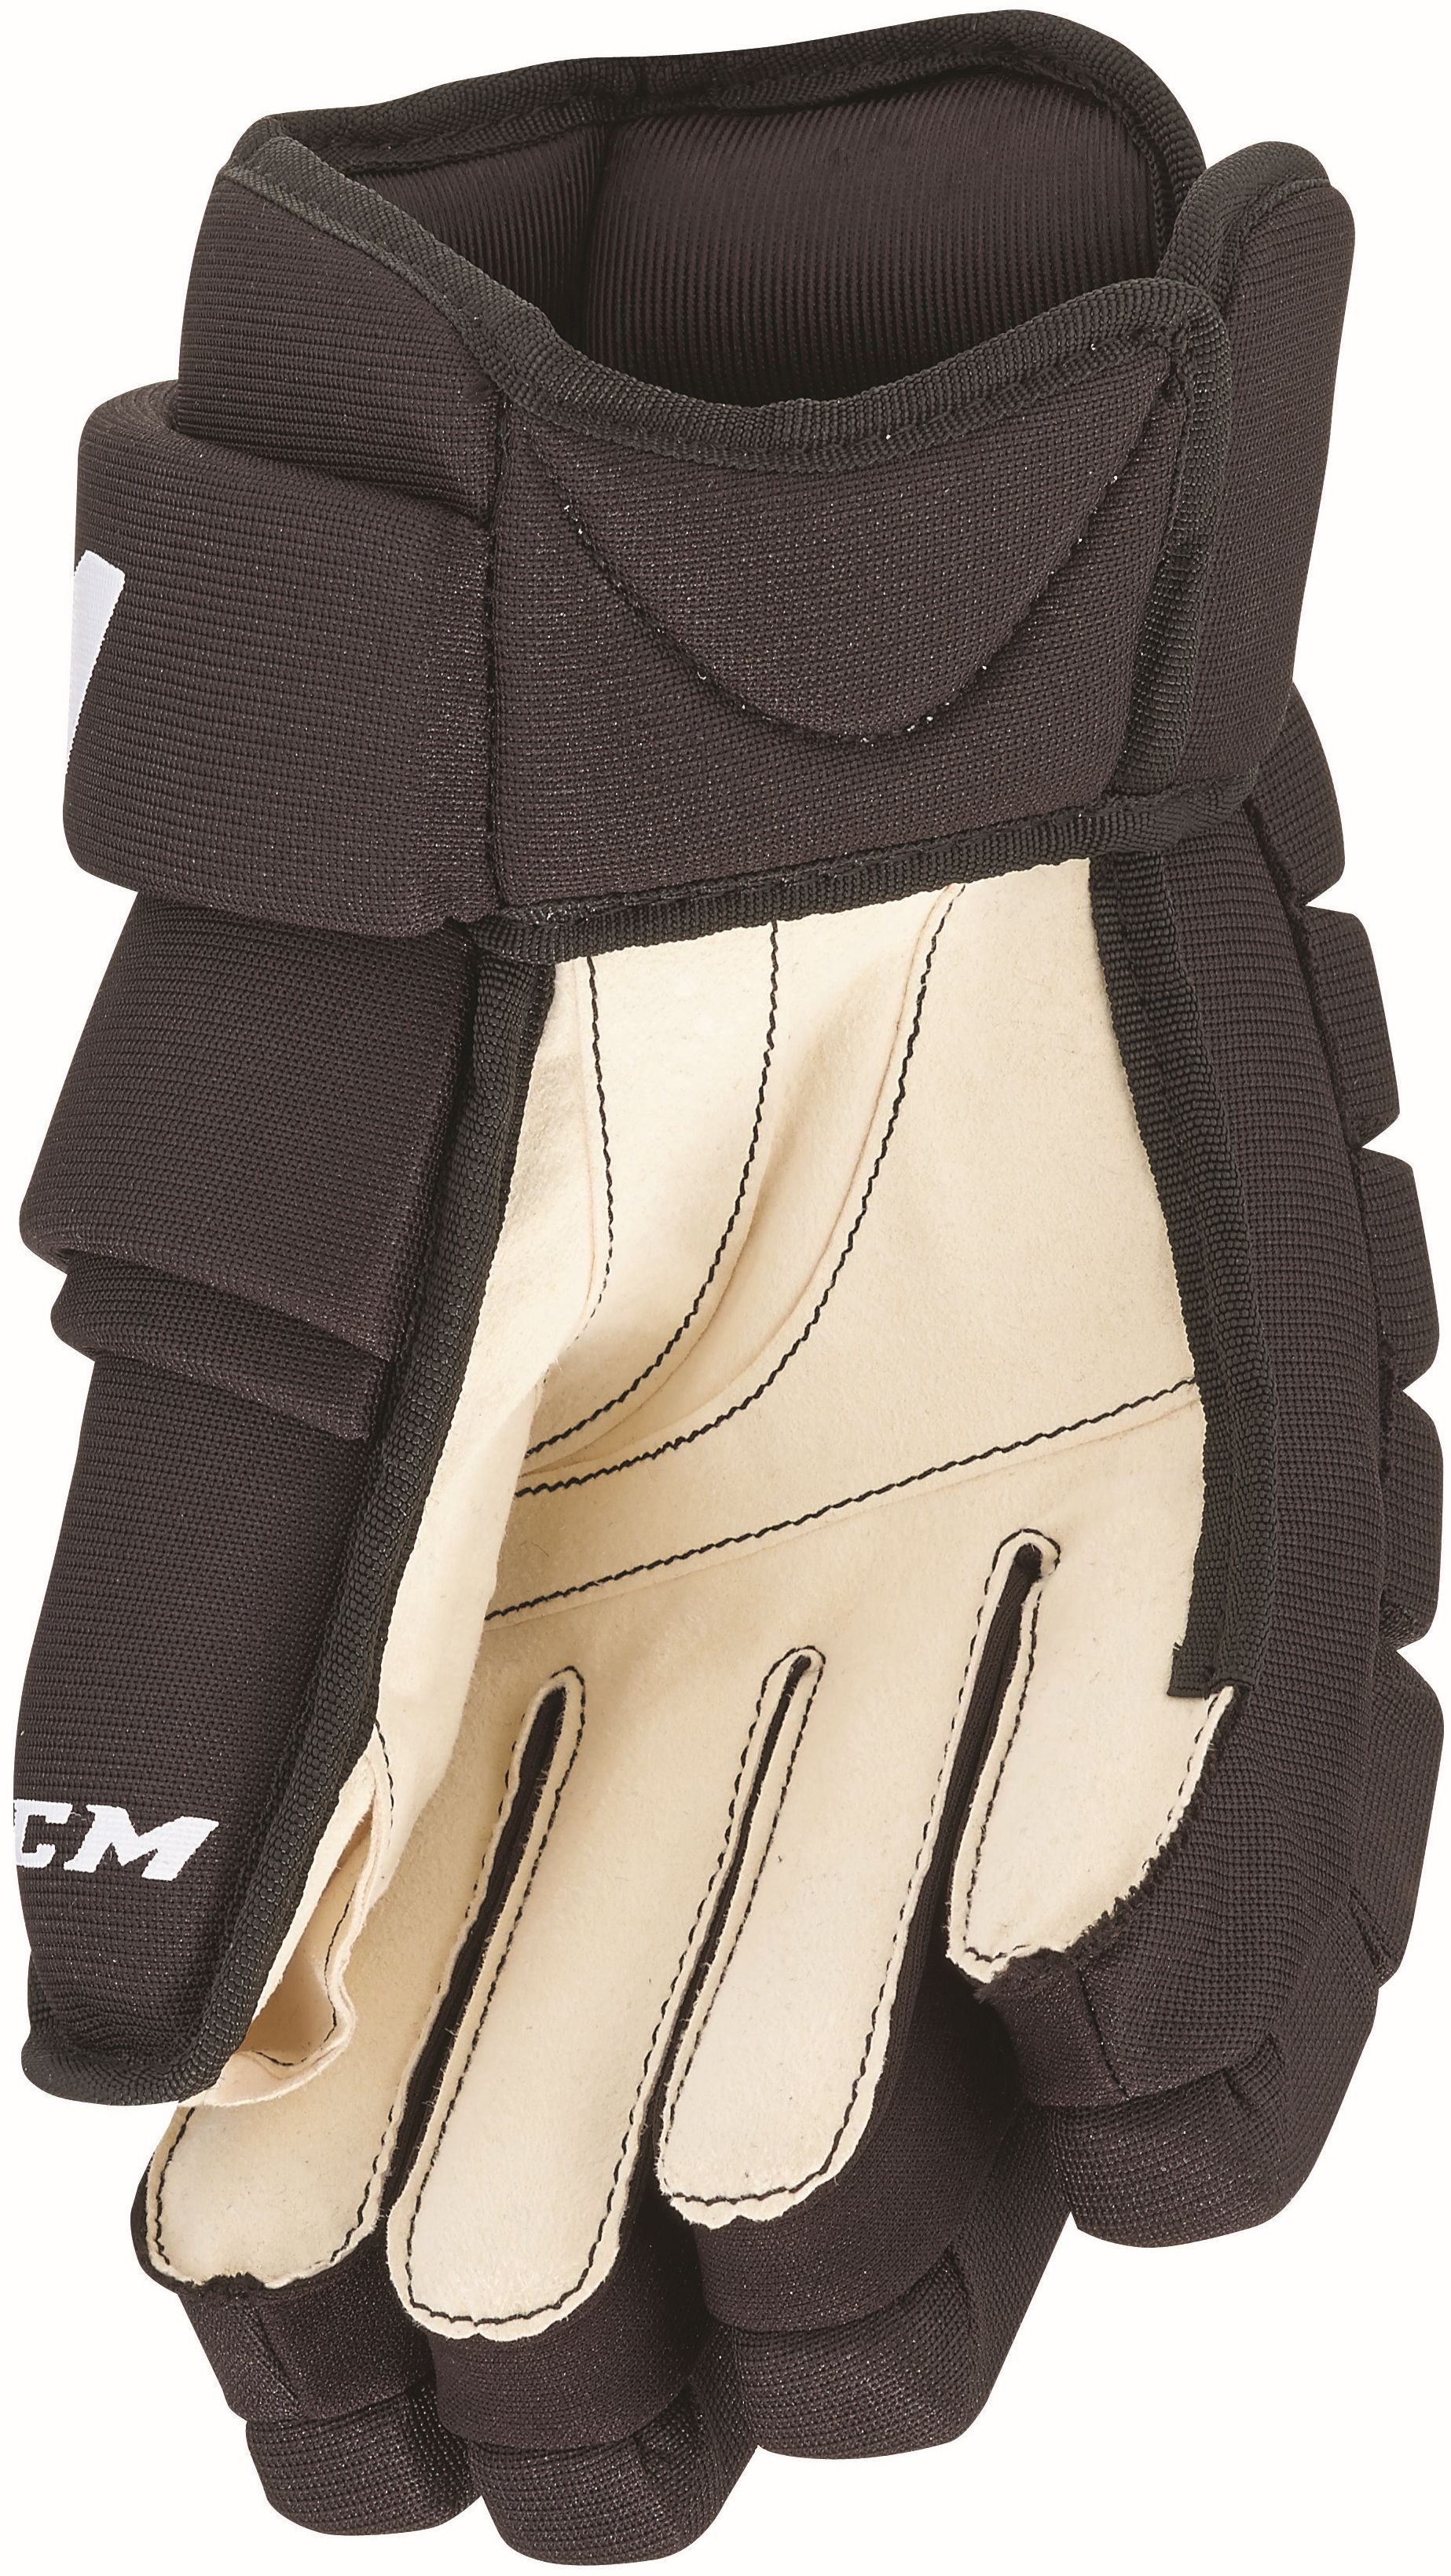 HG 4R III Sr Bk 14 - Hockey Gloves